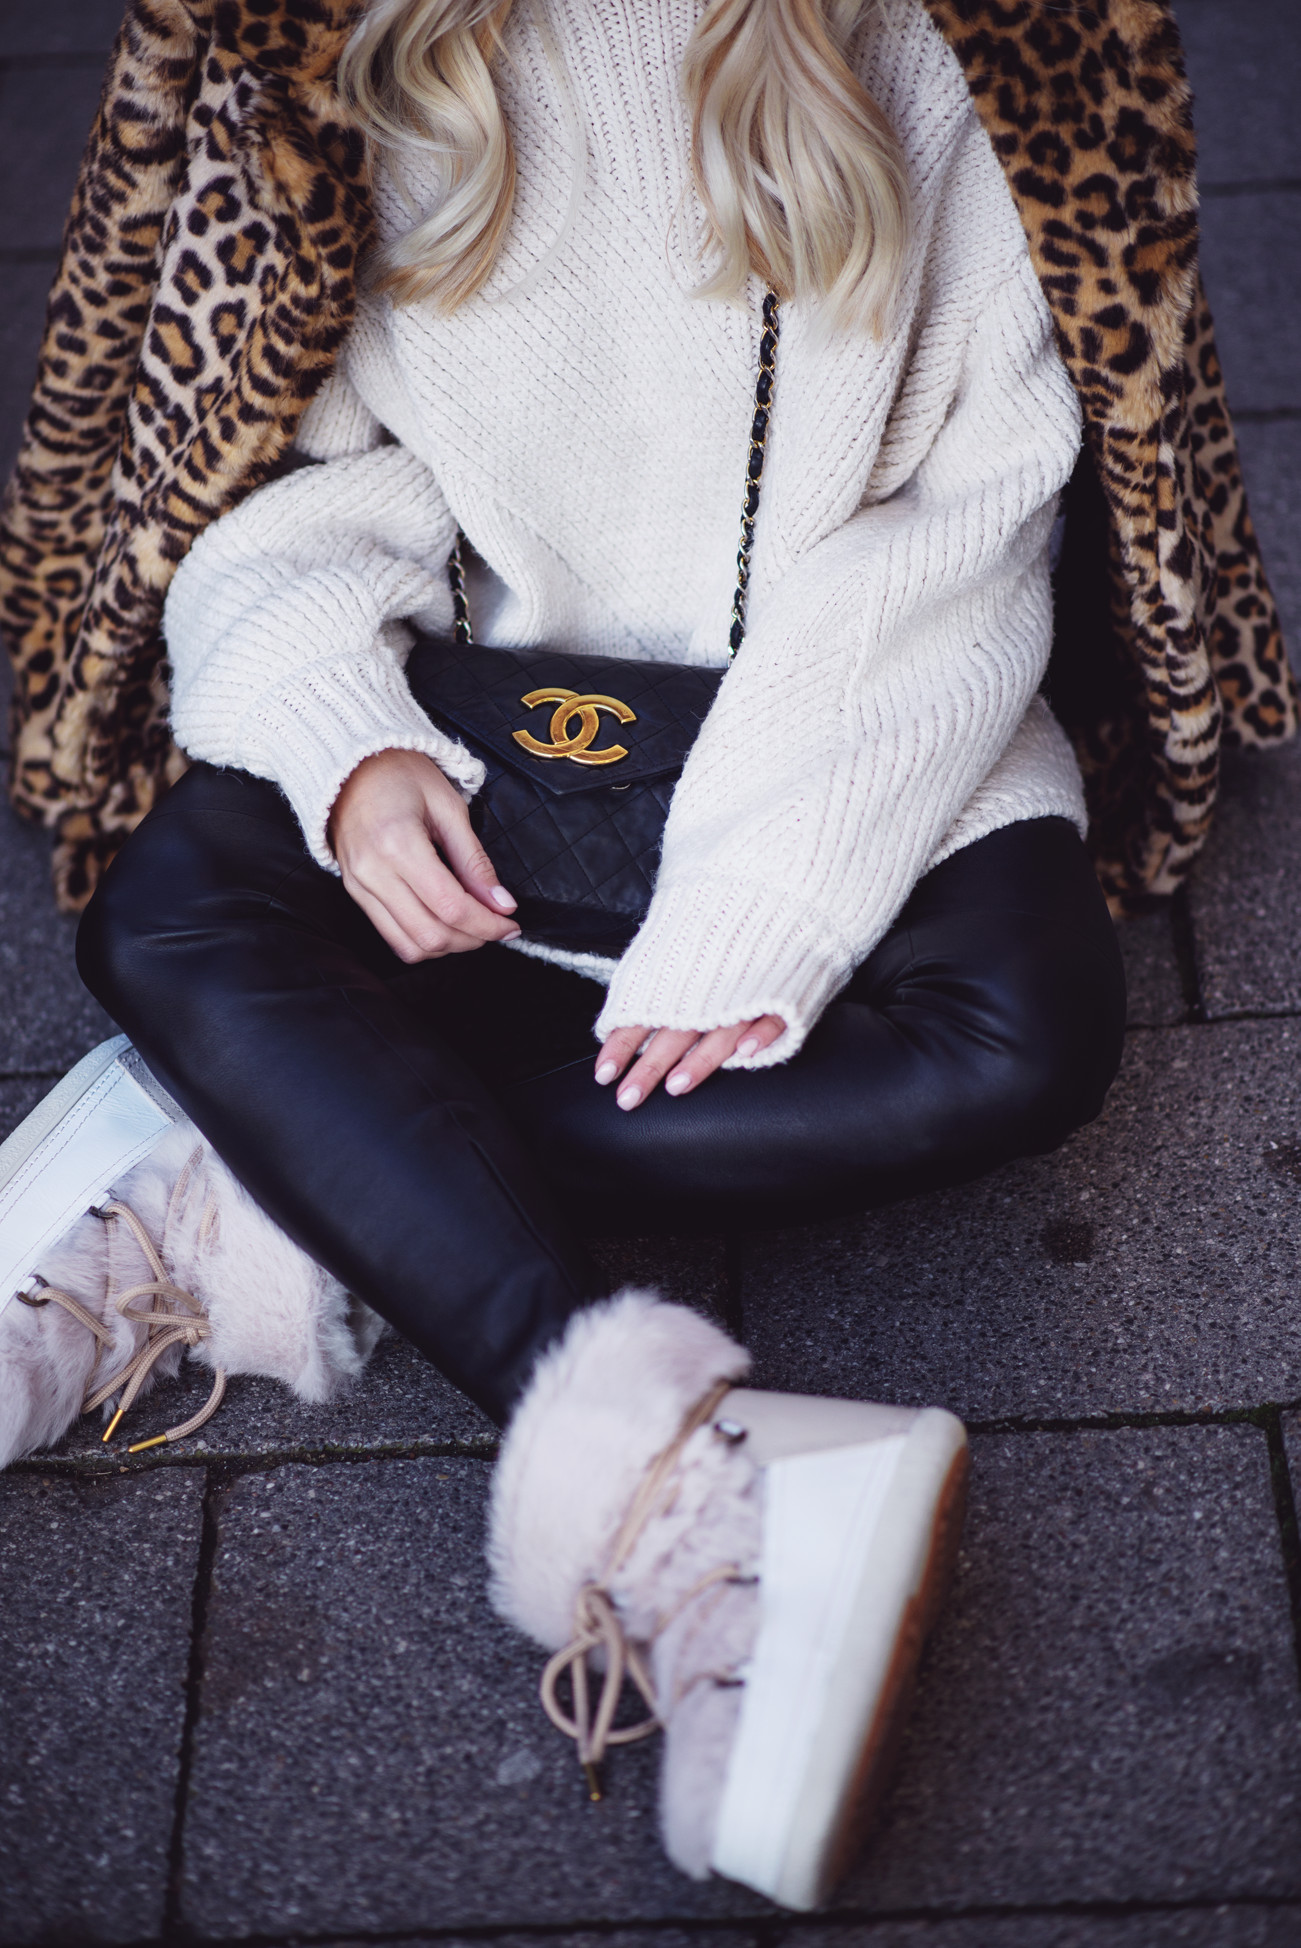 fashion-fashionblogger-blogger-chanel-winter-cozy-knitwear-leo-sequinsophia-7-dsc_6330